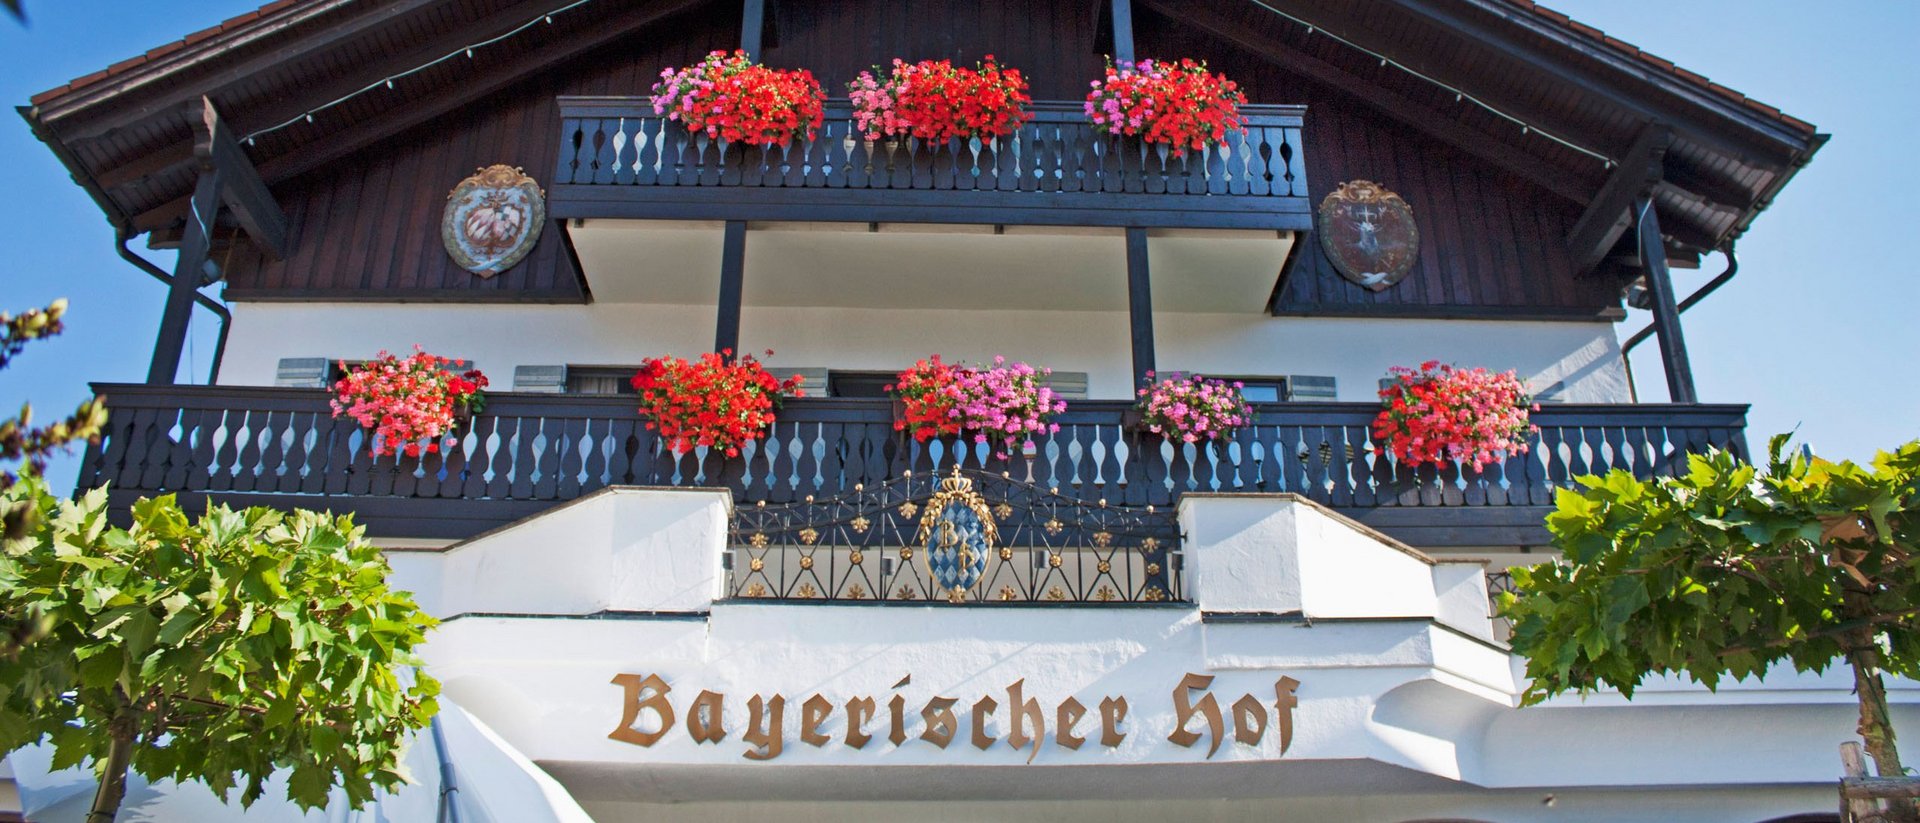 Your Hotel Bayerischer Hof in Oberstaufen